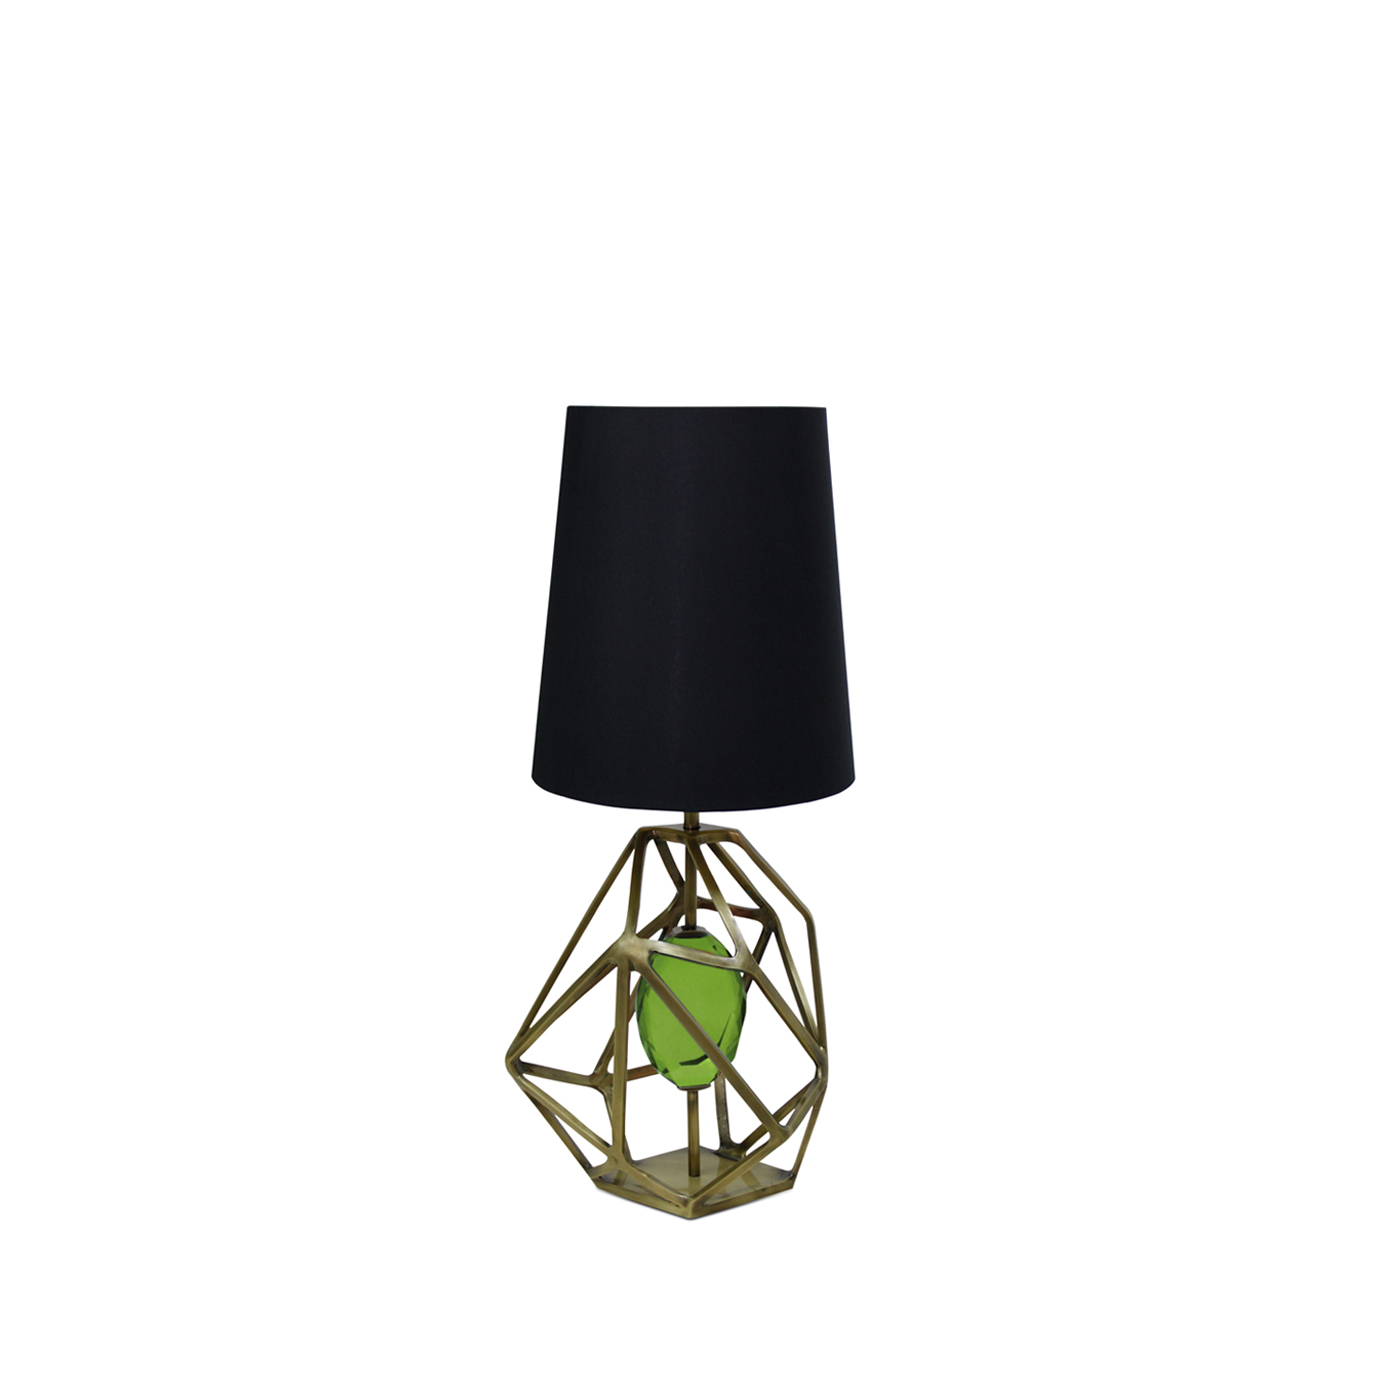 gem table lamp by koket modern parisian design